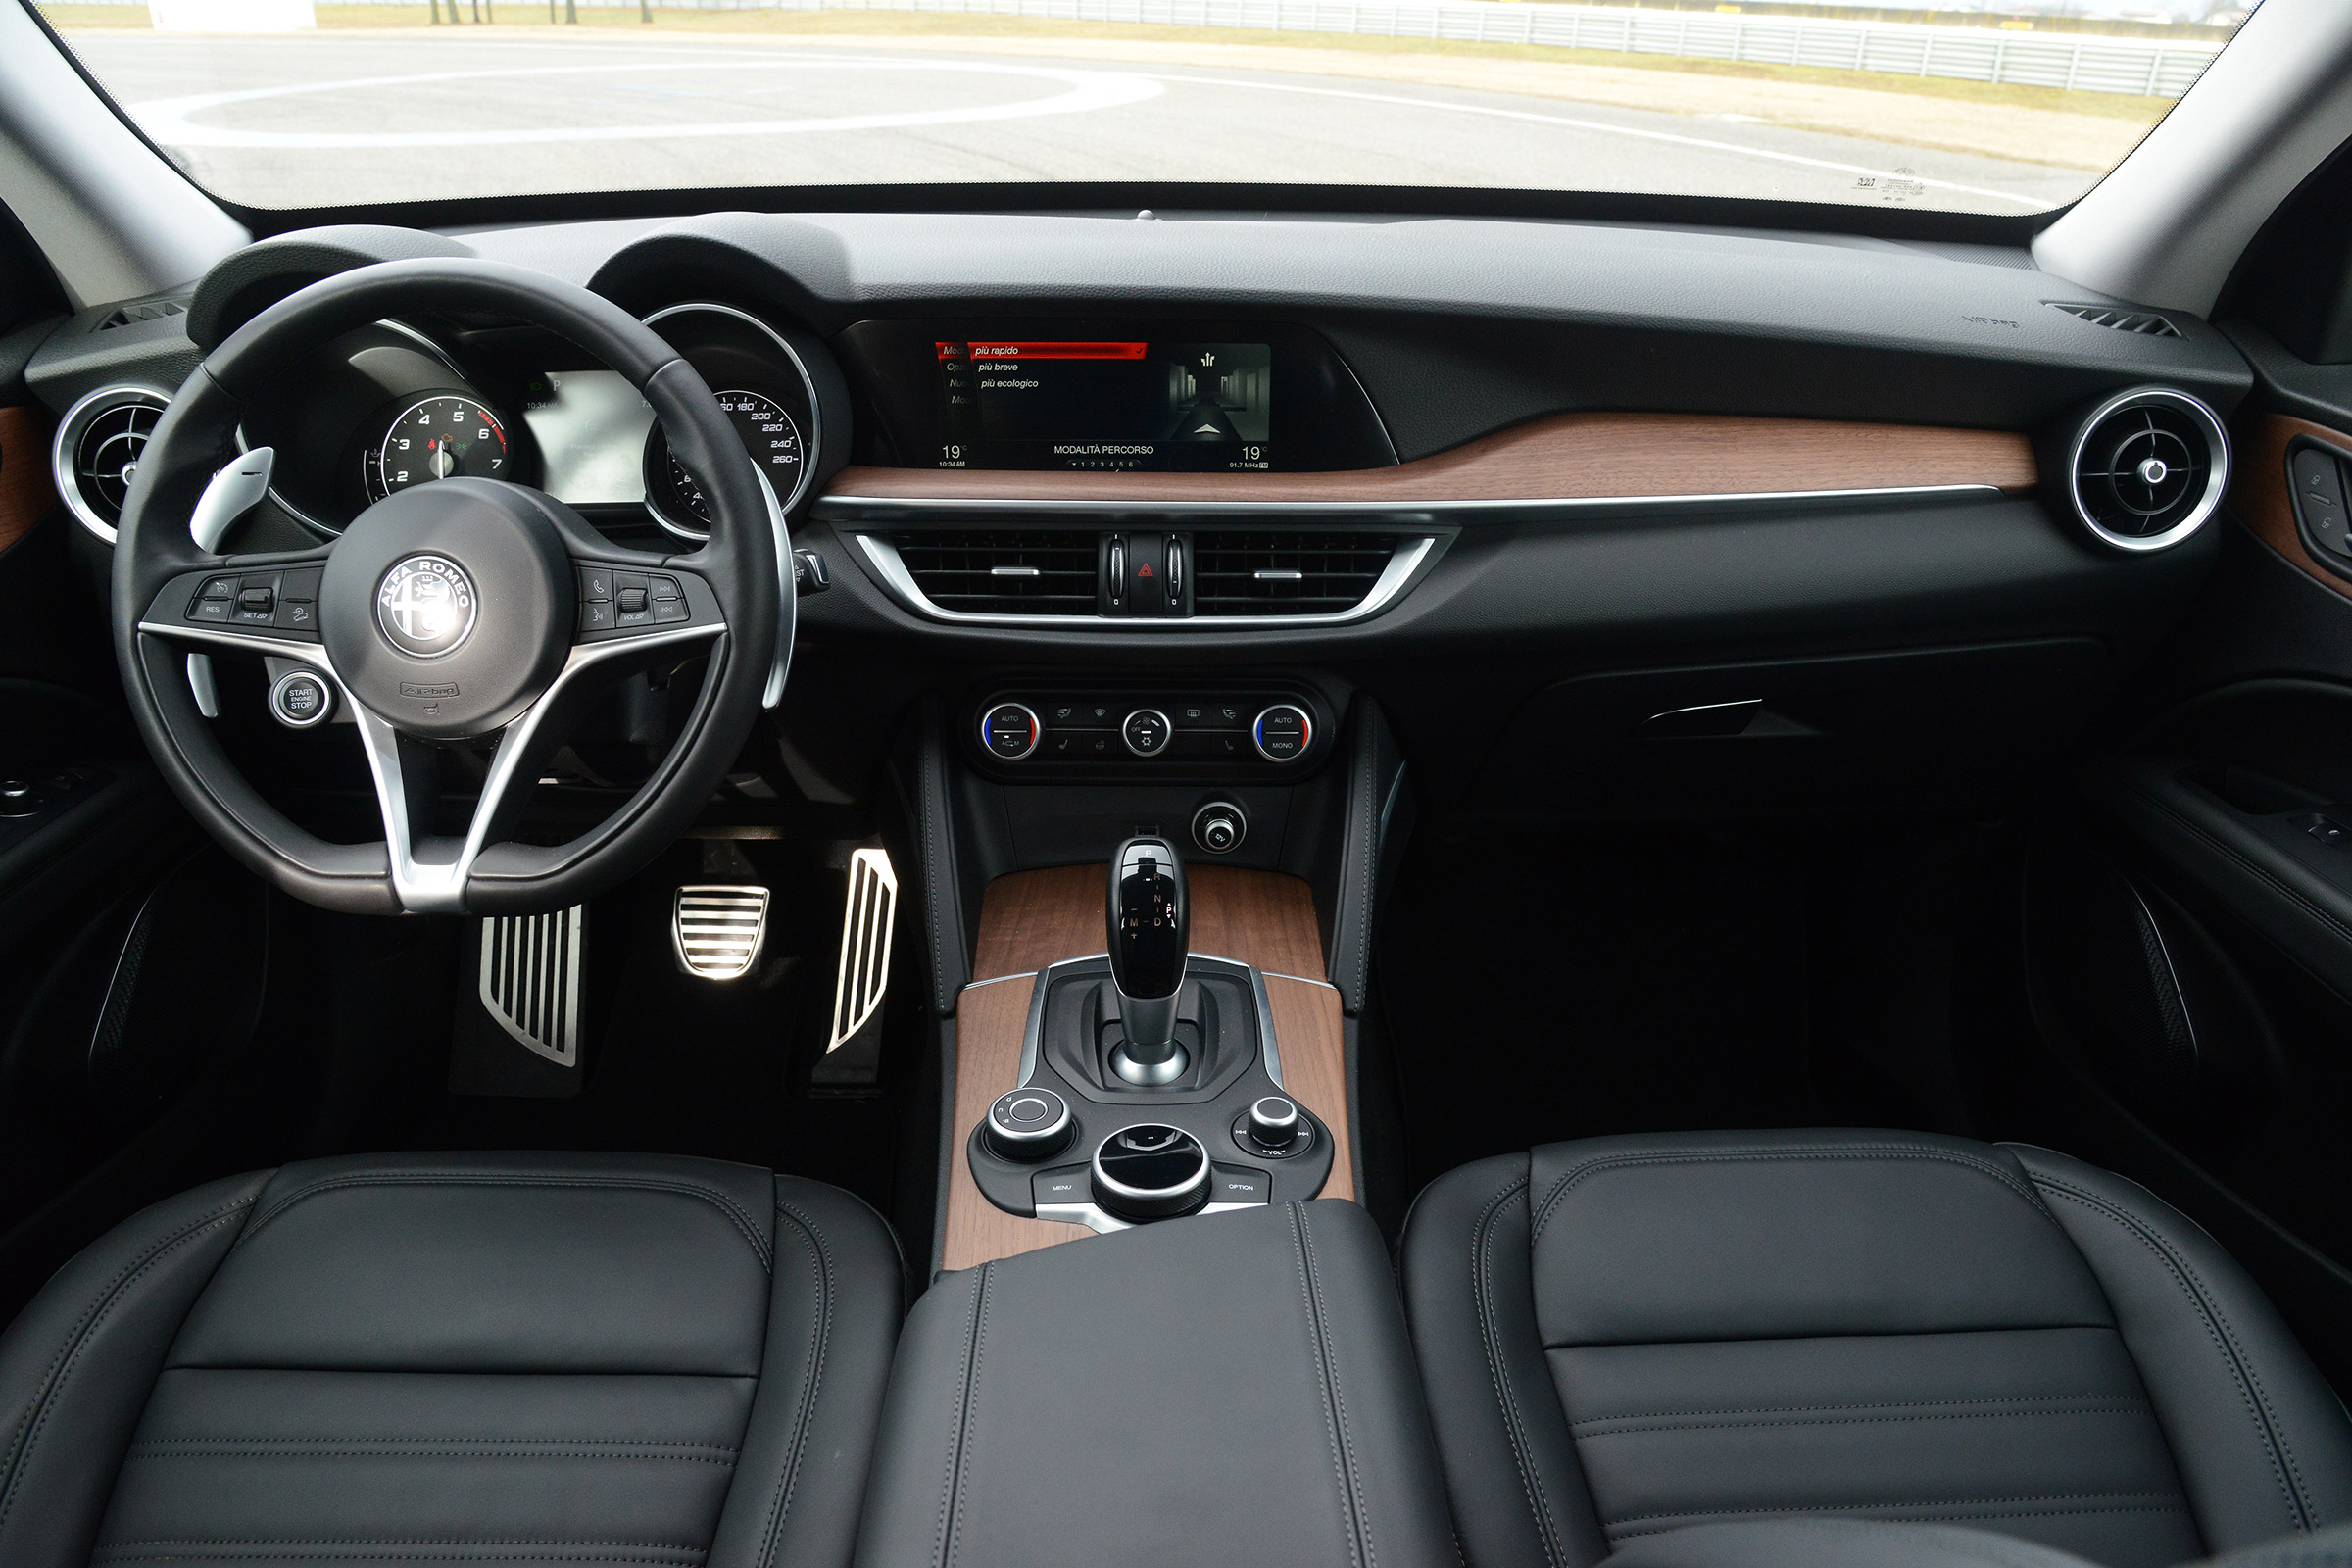 Tick neck prepare Alfa Romeo Stelvio review - interior and tech | evo